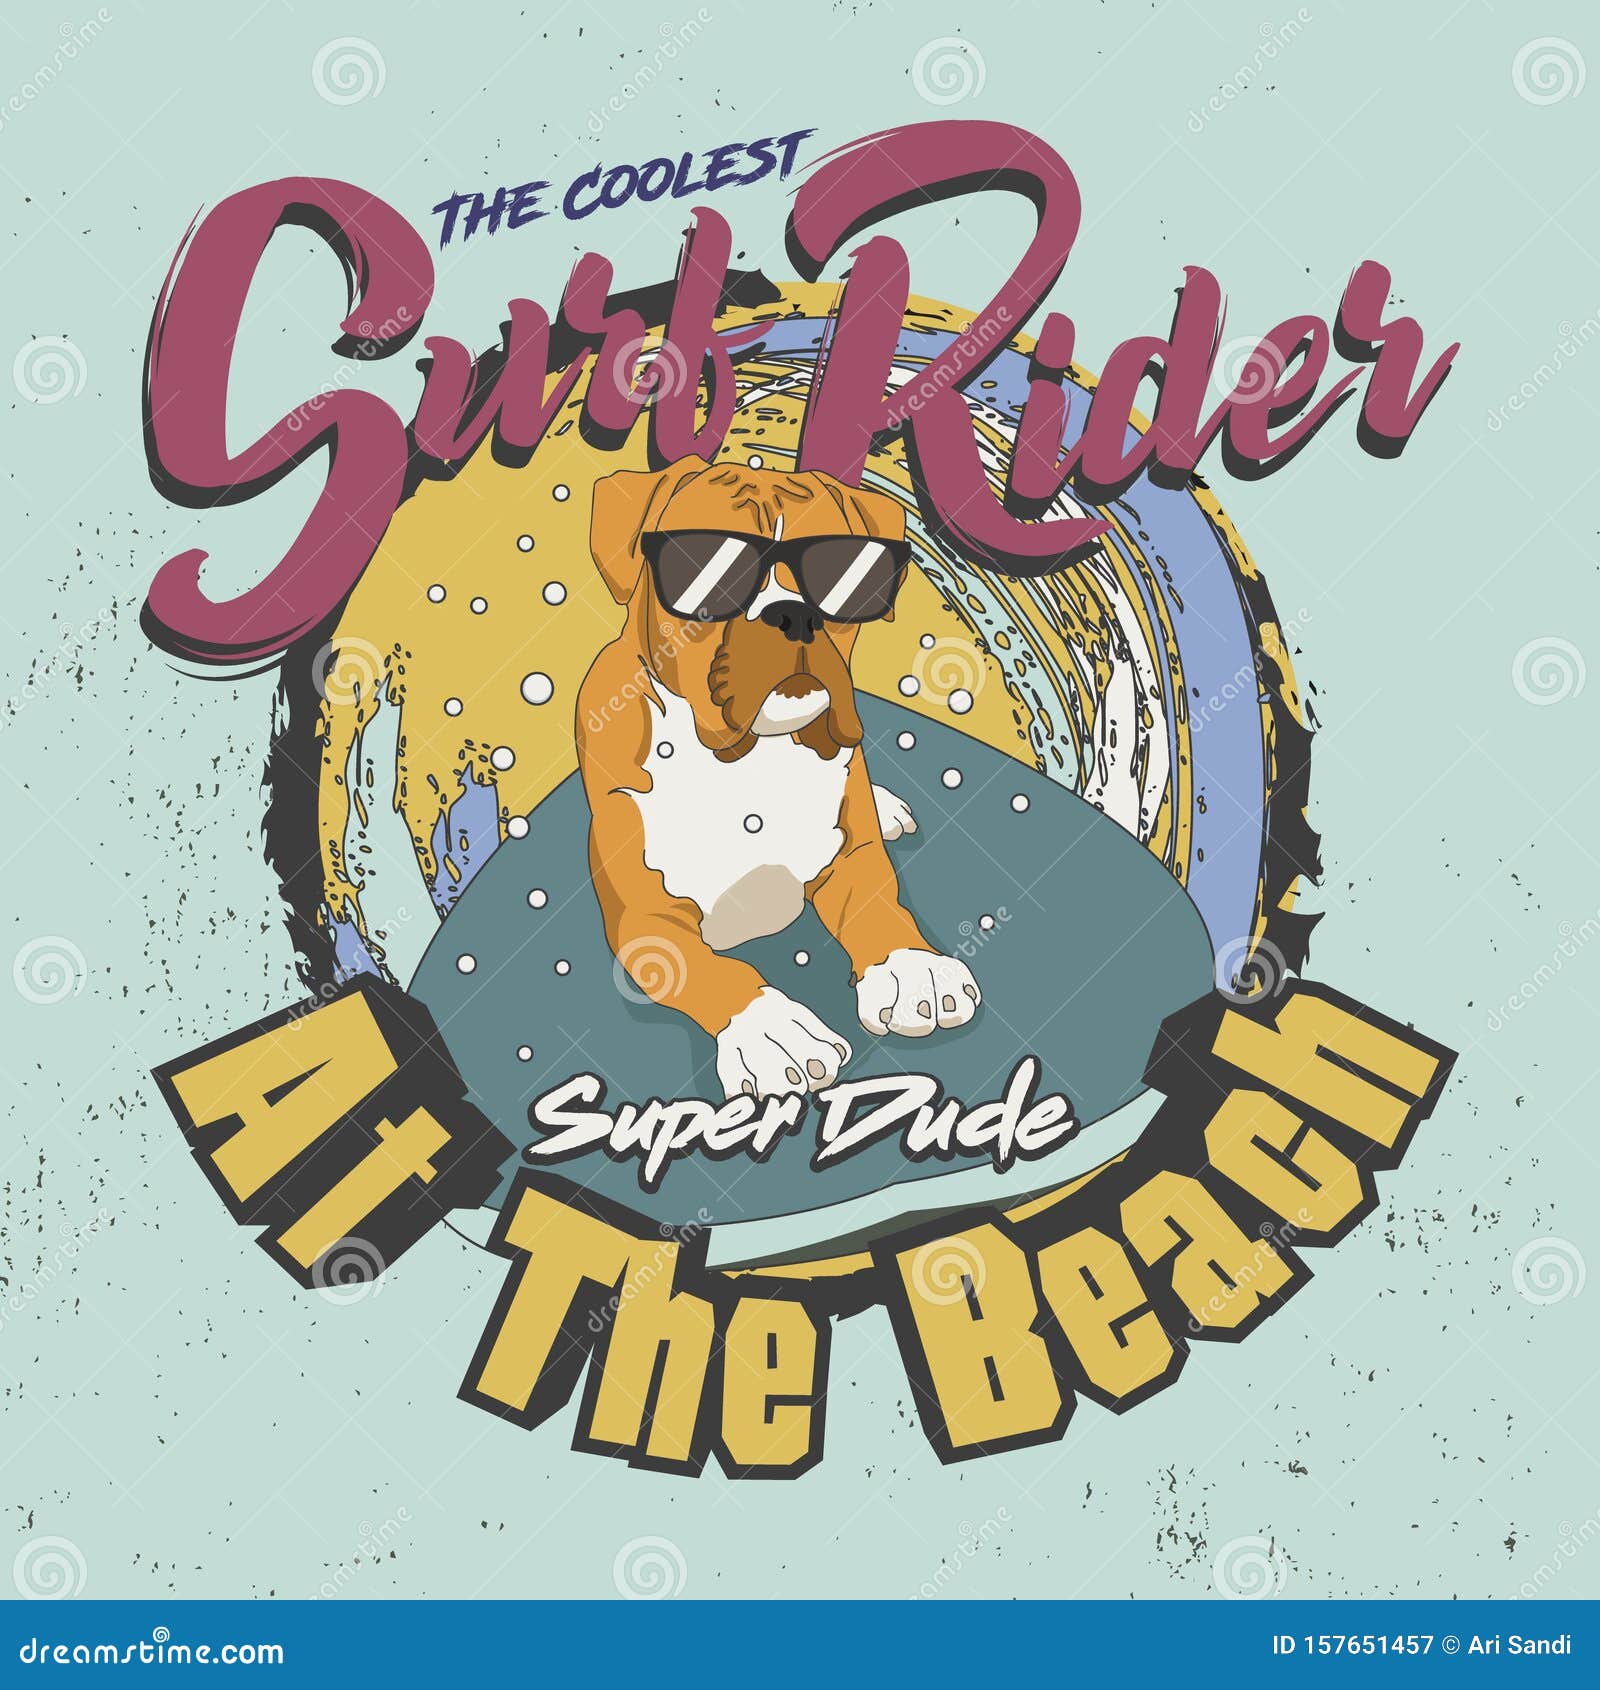 DOG BEACH Funny Sticker OB Ocean Beach CA Dog Lover Surfboard Skateboard 